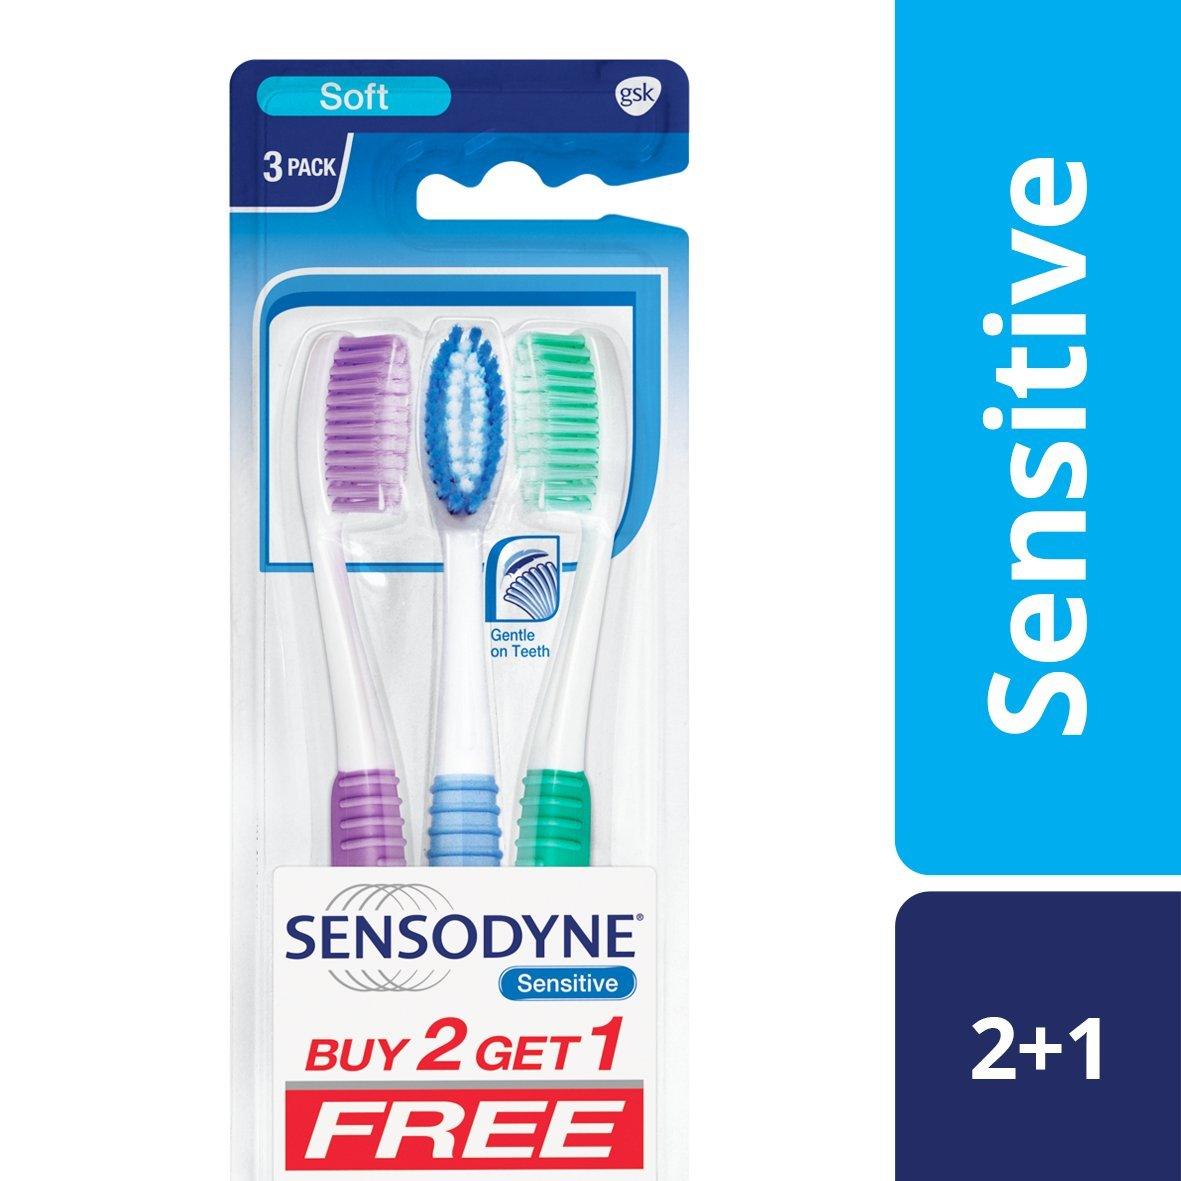 Sensodyne Sensitive Toothbrush (2+1 Pack) -  Manual Toothbrushes in Sri Lanka from Arcade Online Shopping - Just Rs. 1590!